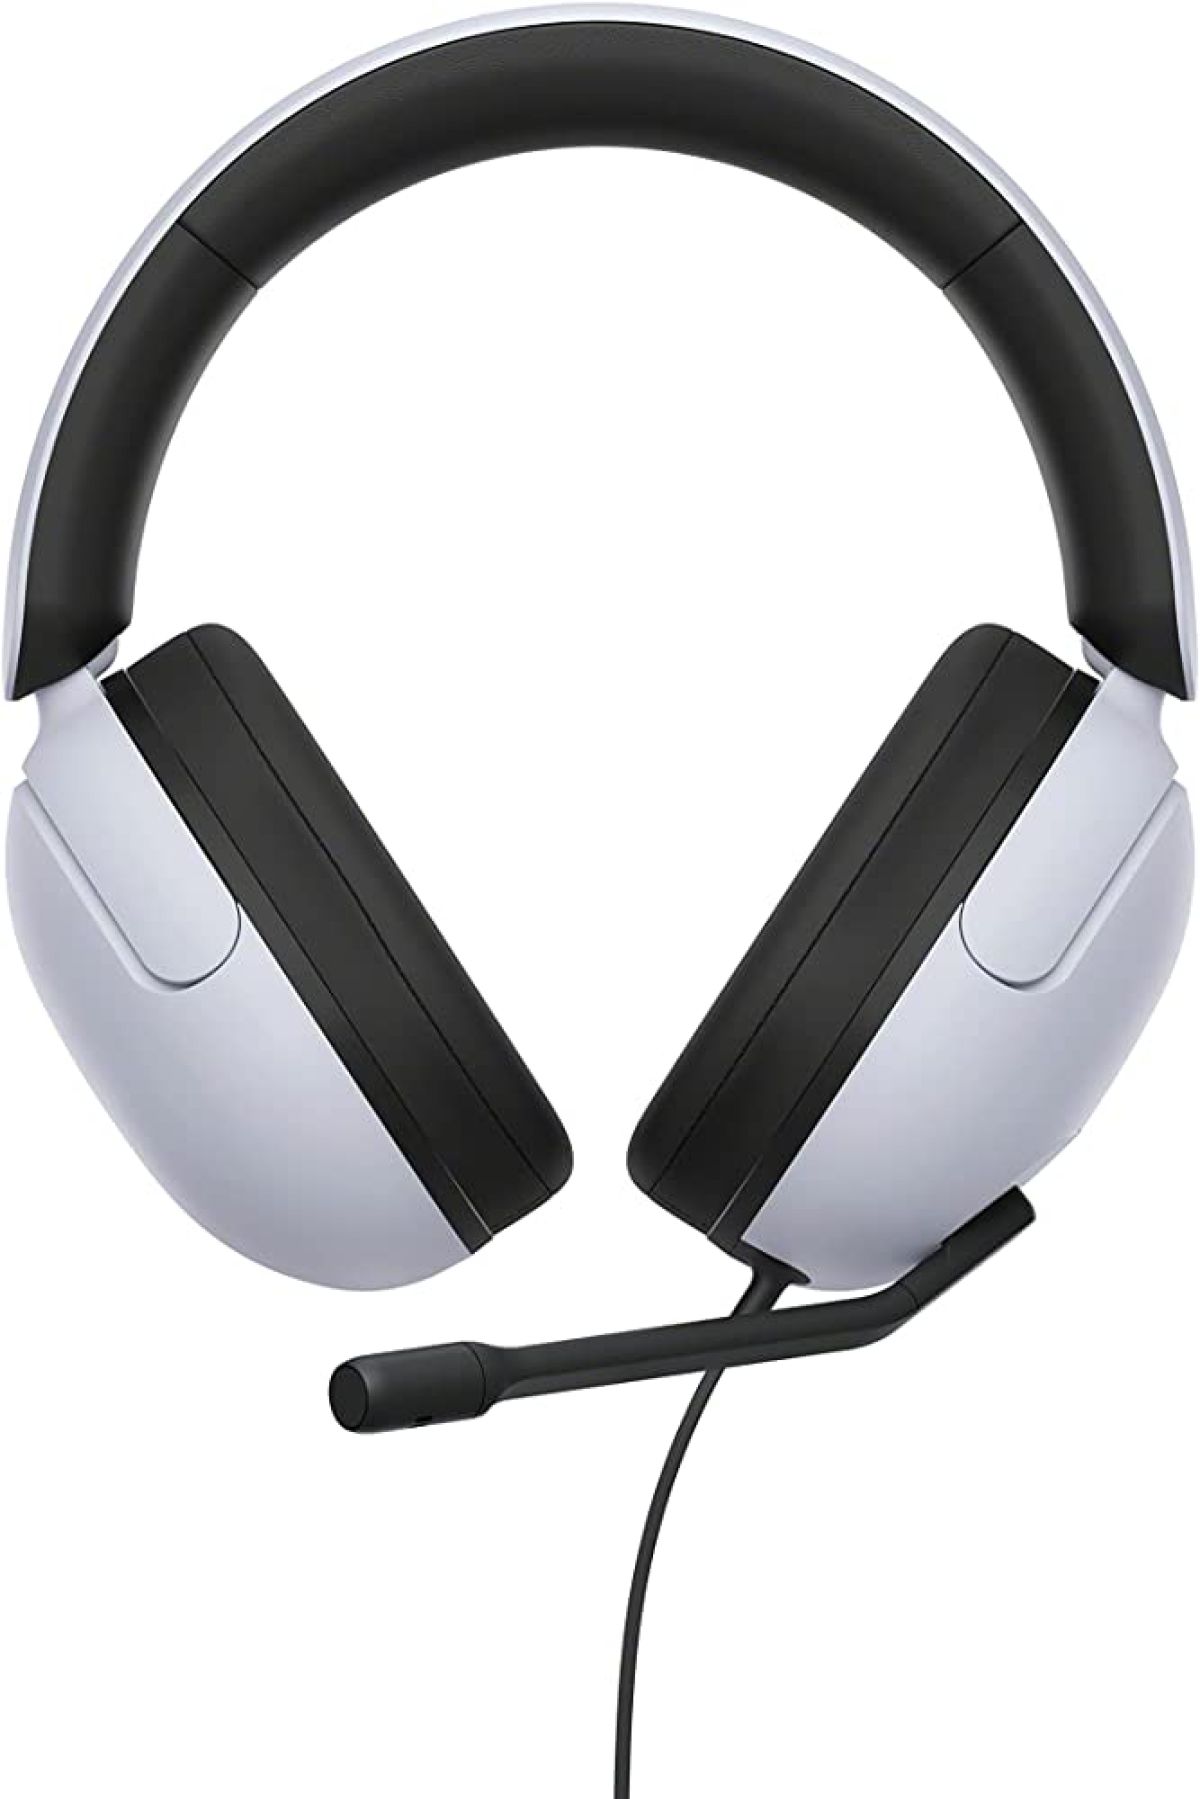 Sony Inzone H3 casque gaming blanc